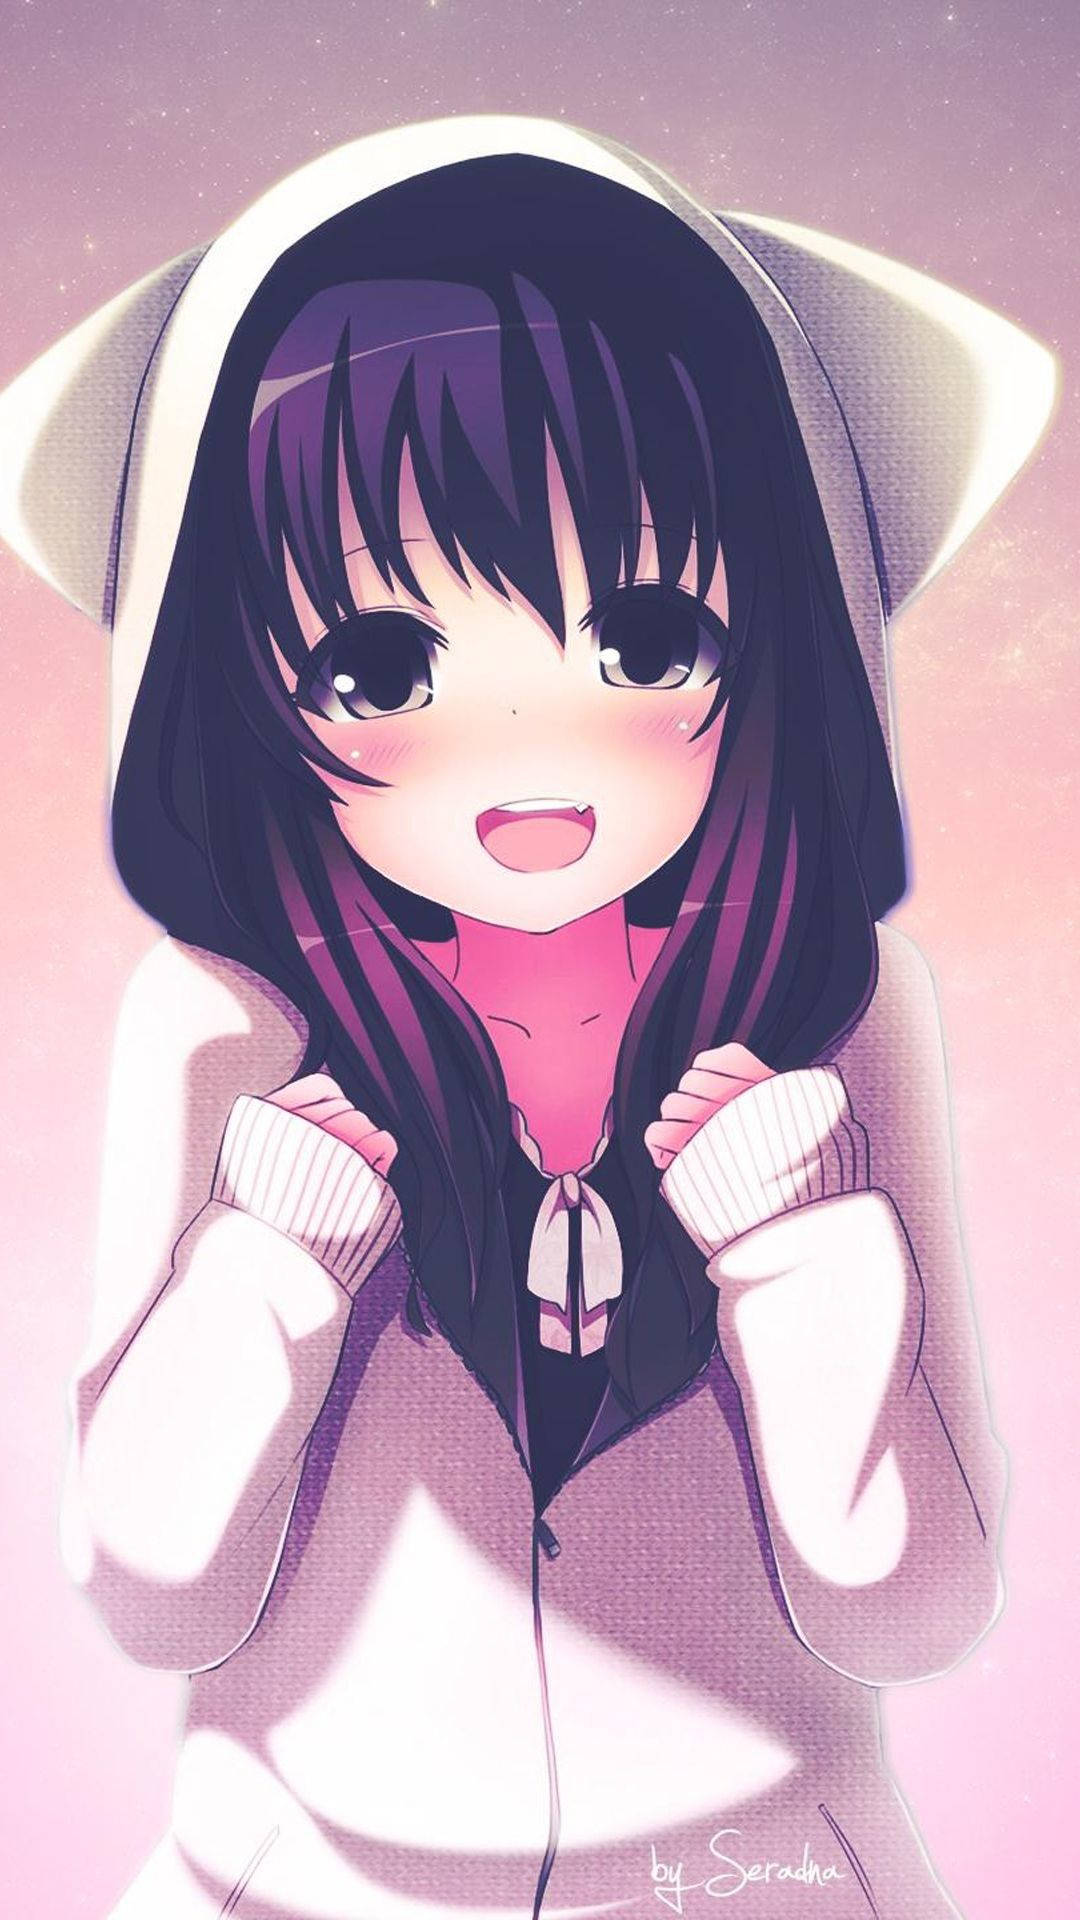 Free Cute Anime Girl iPhone Wallpaper Downloads, Cute Anime Girl iPhone Wallpaper for FREE